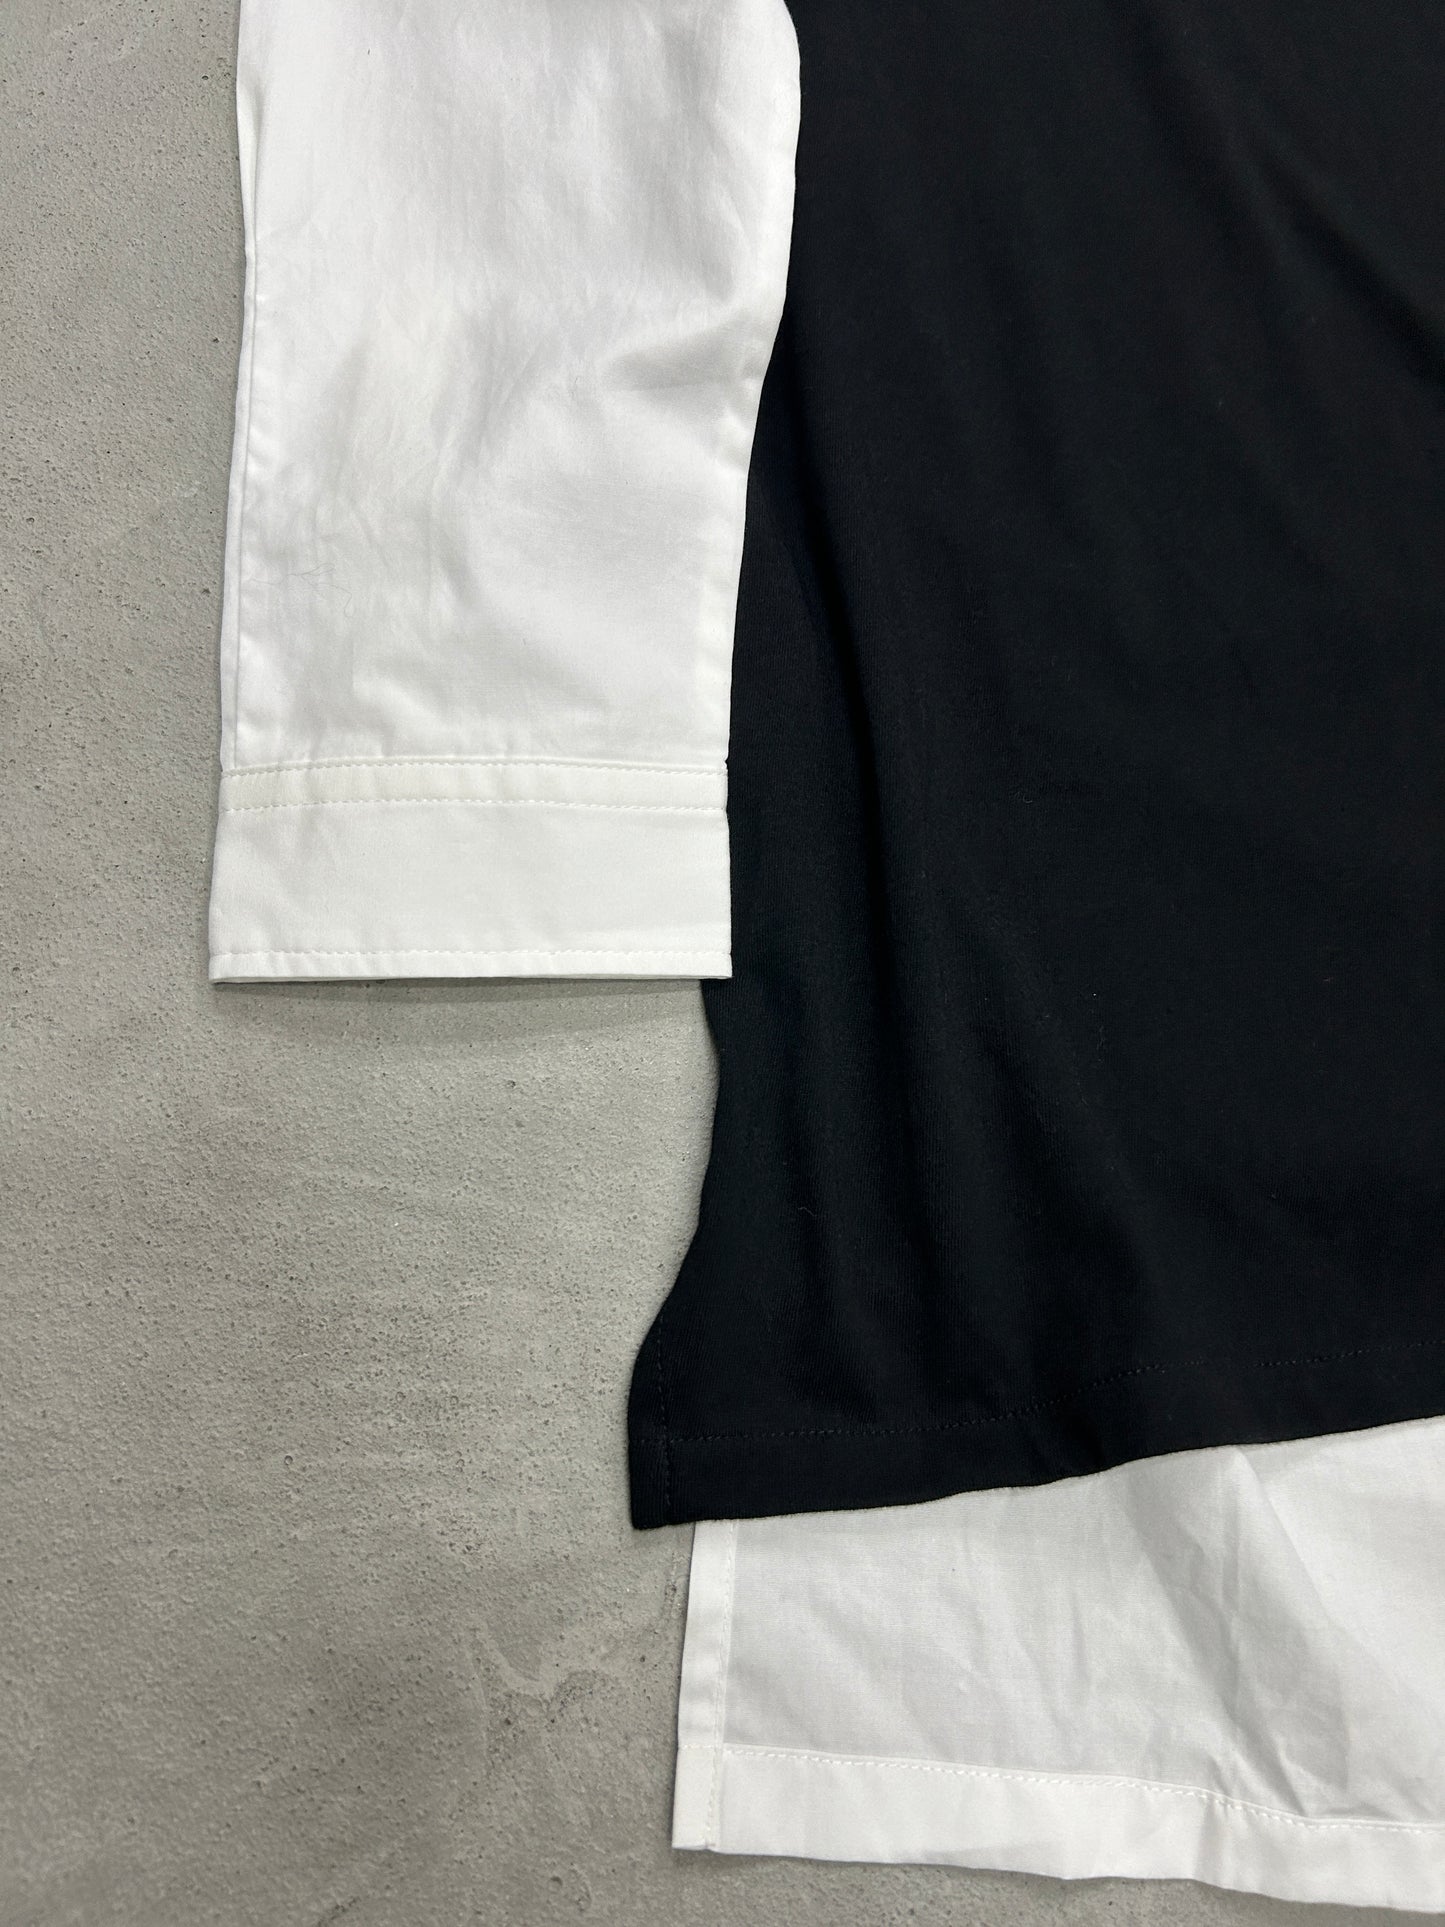 B Yohji Yamamoto Shirt Sleeve tee-Size 2